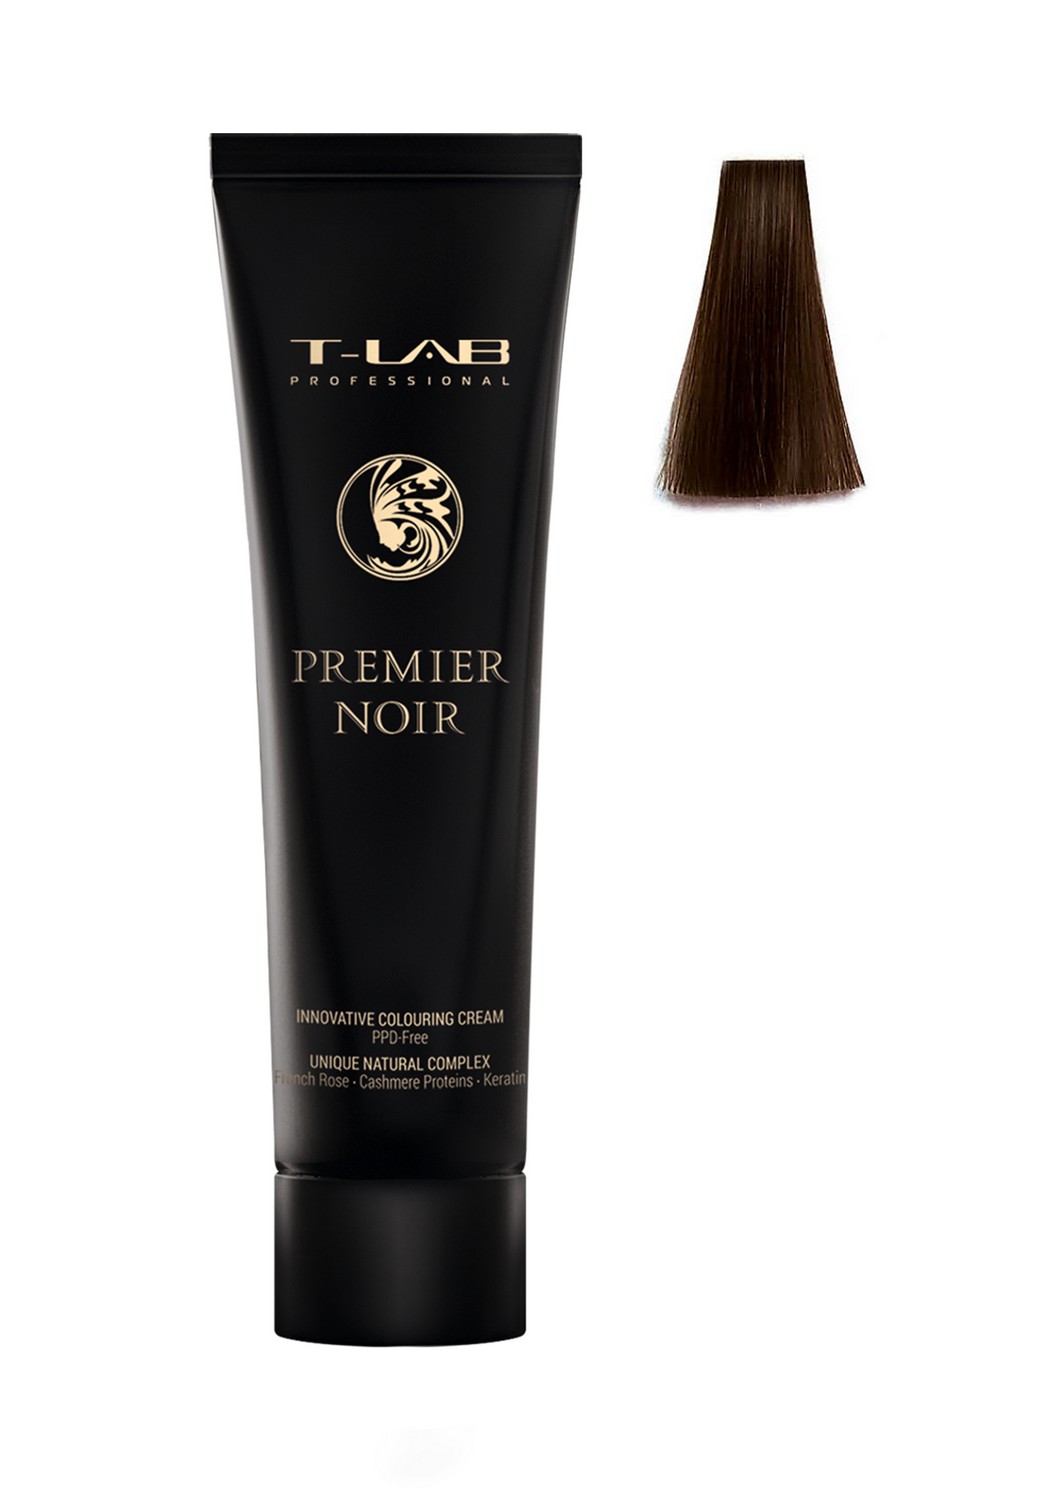 Крем-краска T-LAB Professional Premier Noir colouring cream, оттенок 4.3 (golden brown) - фото 2